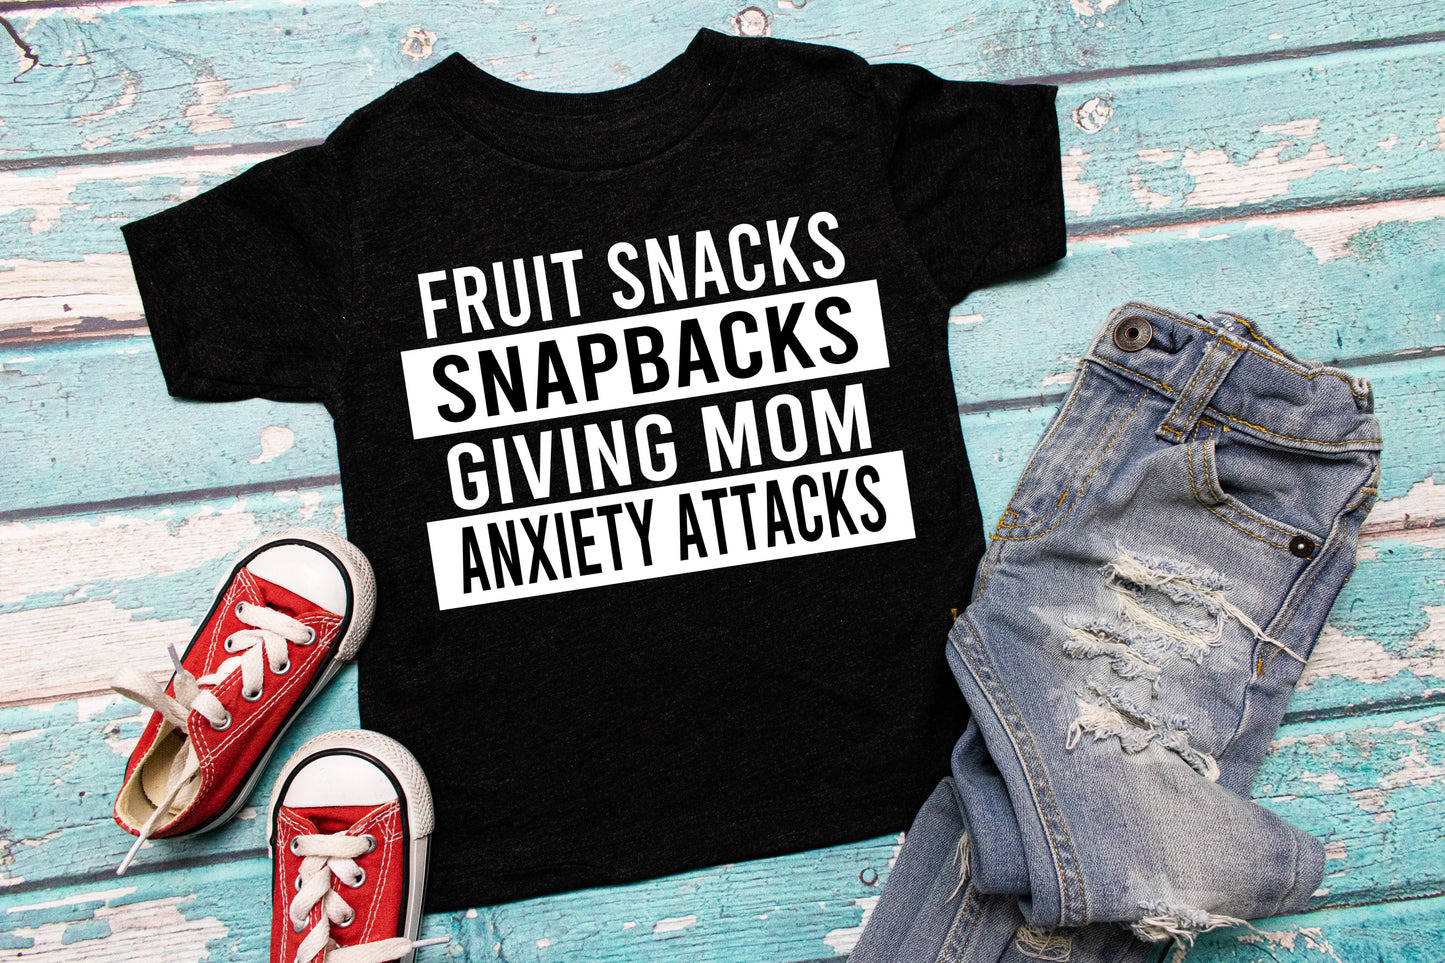 Fruit snacks, snapbacks, giving mom anxiety attacks